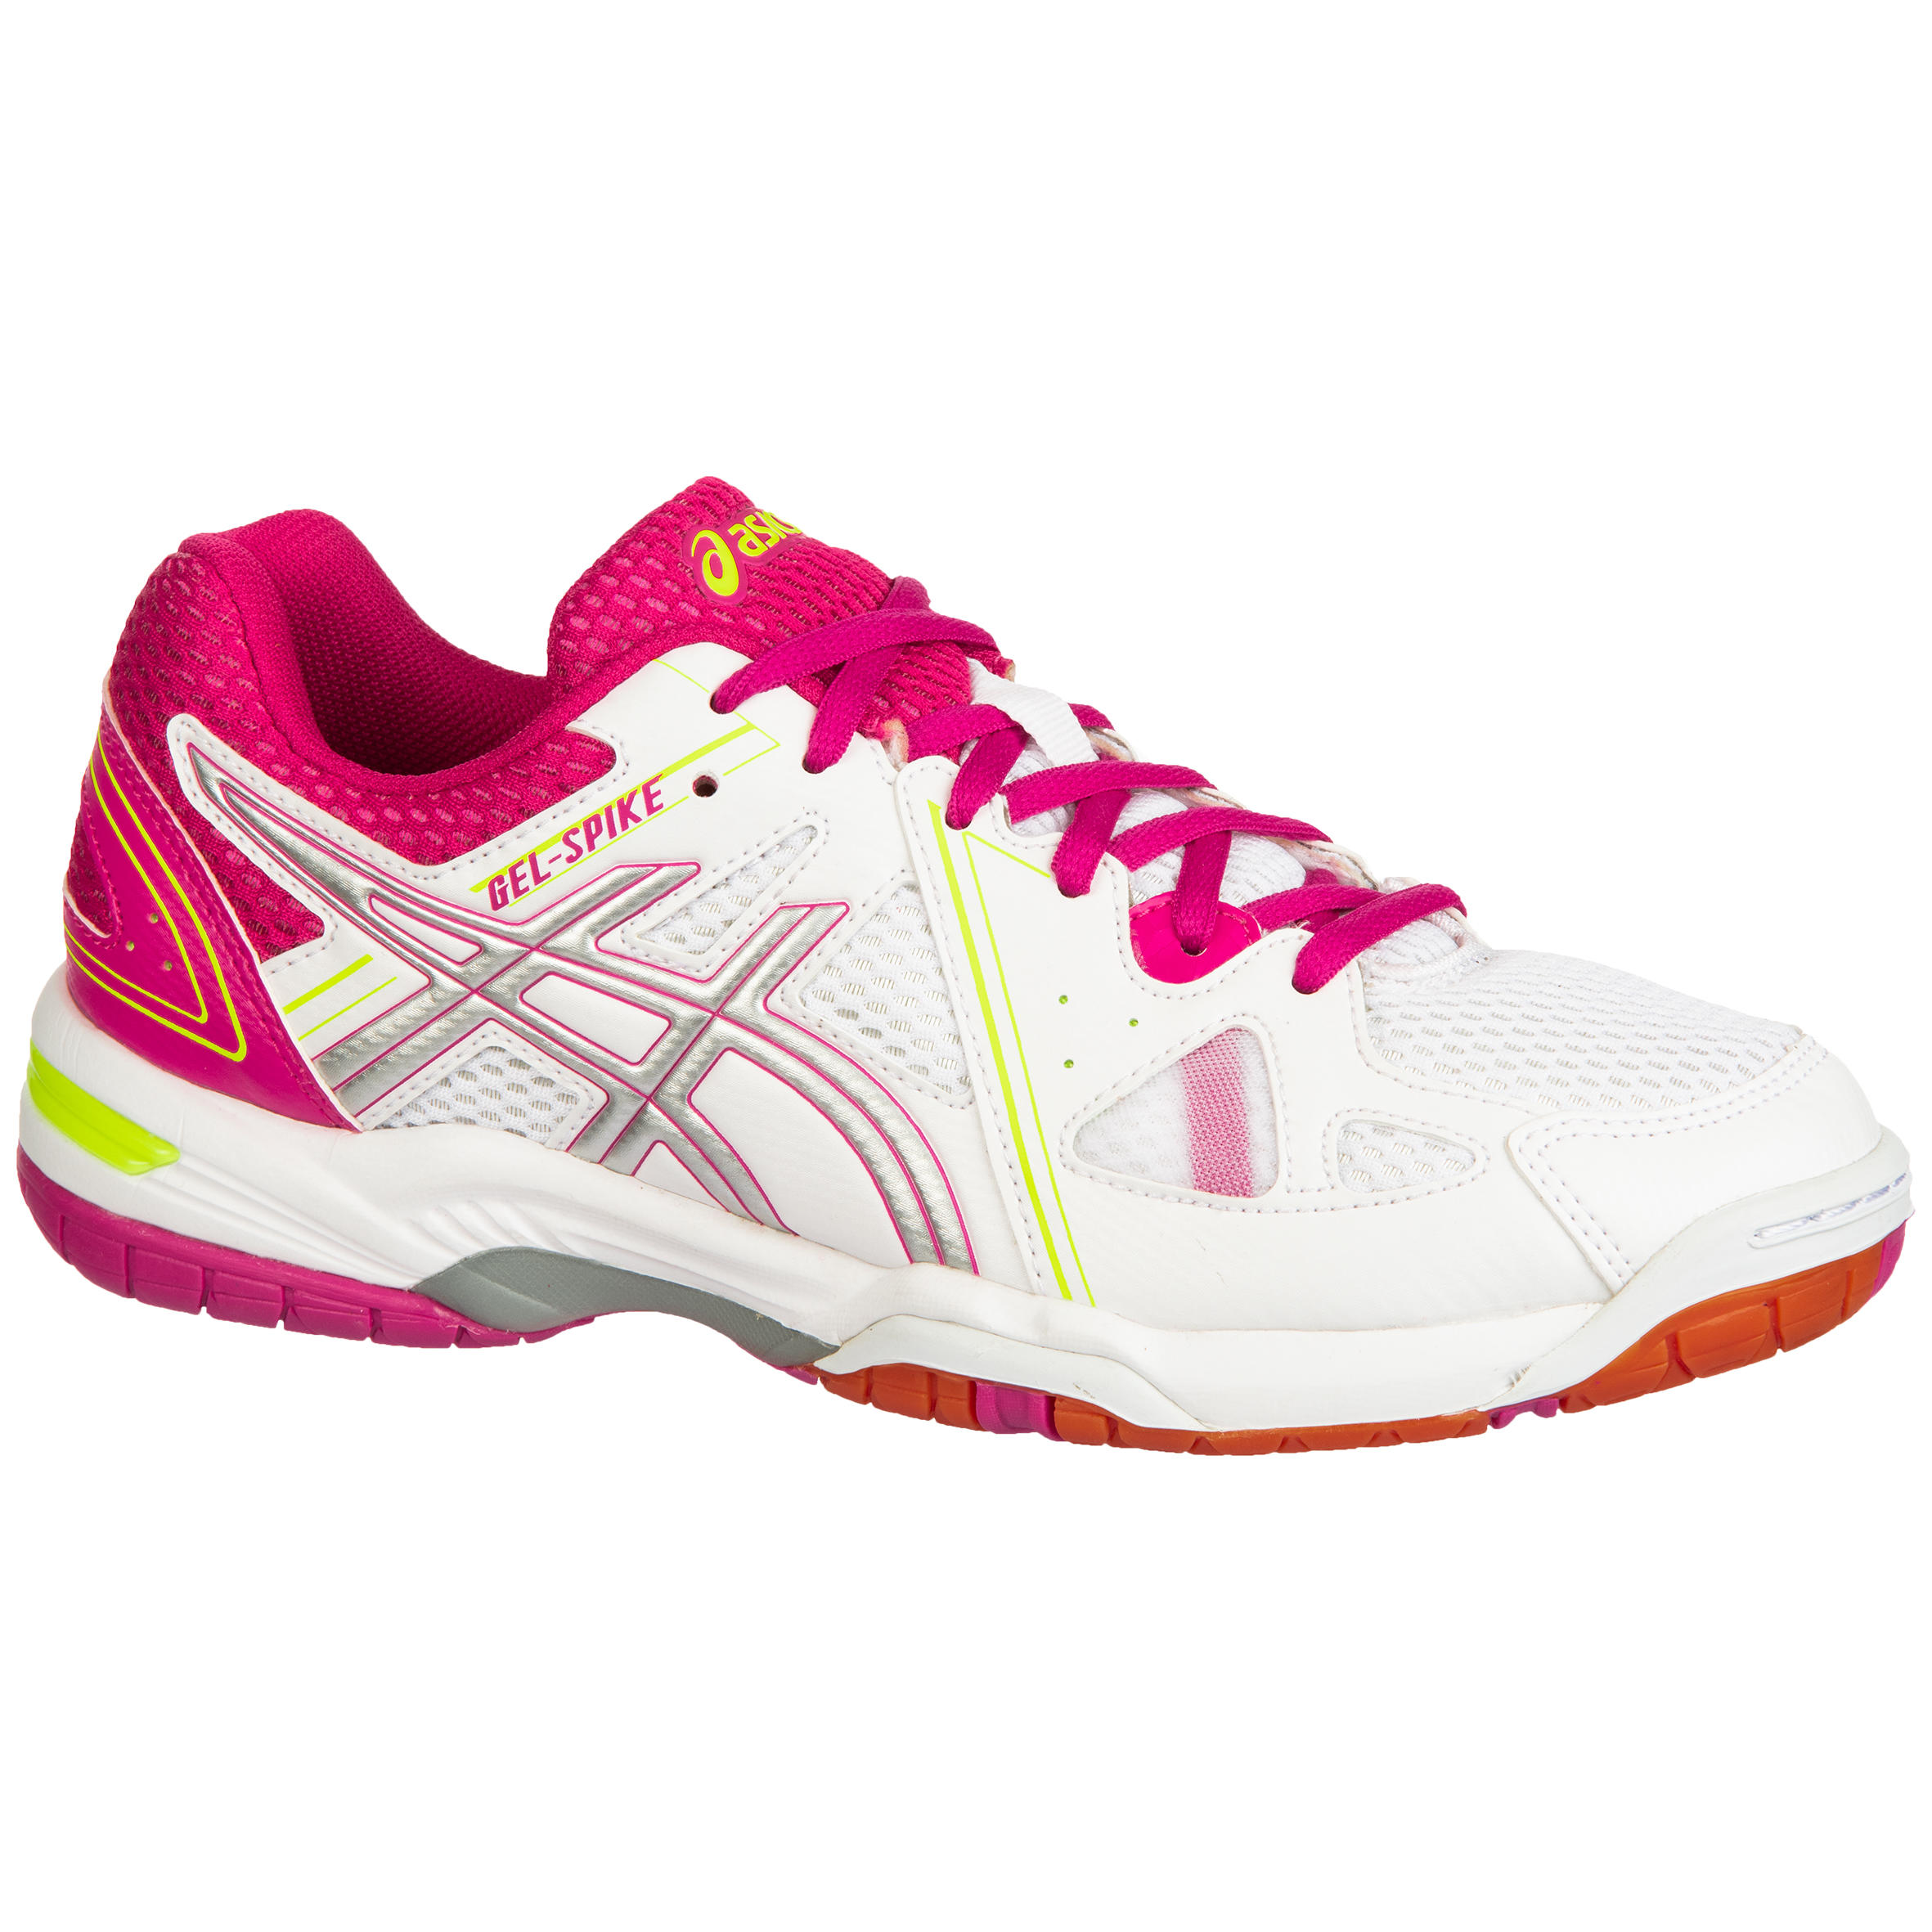 Gel Spike Women's Volleyball Shoes - White/Pink ASICS - Decathlon